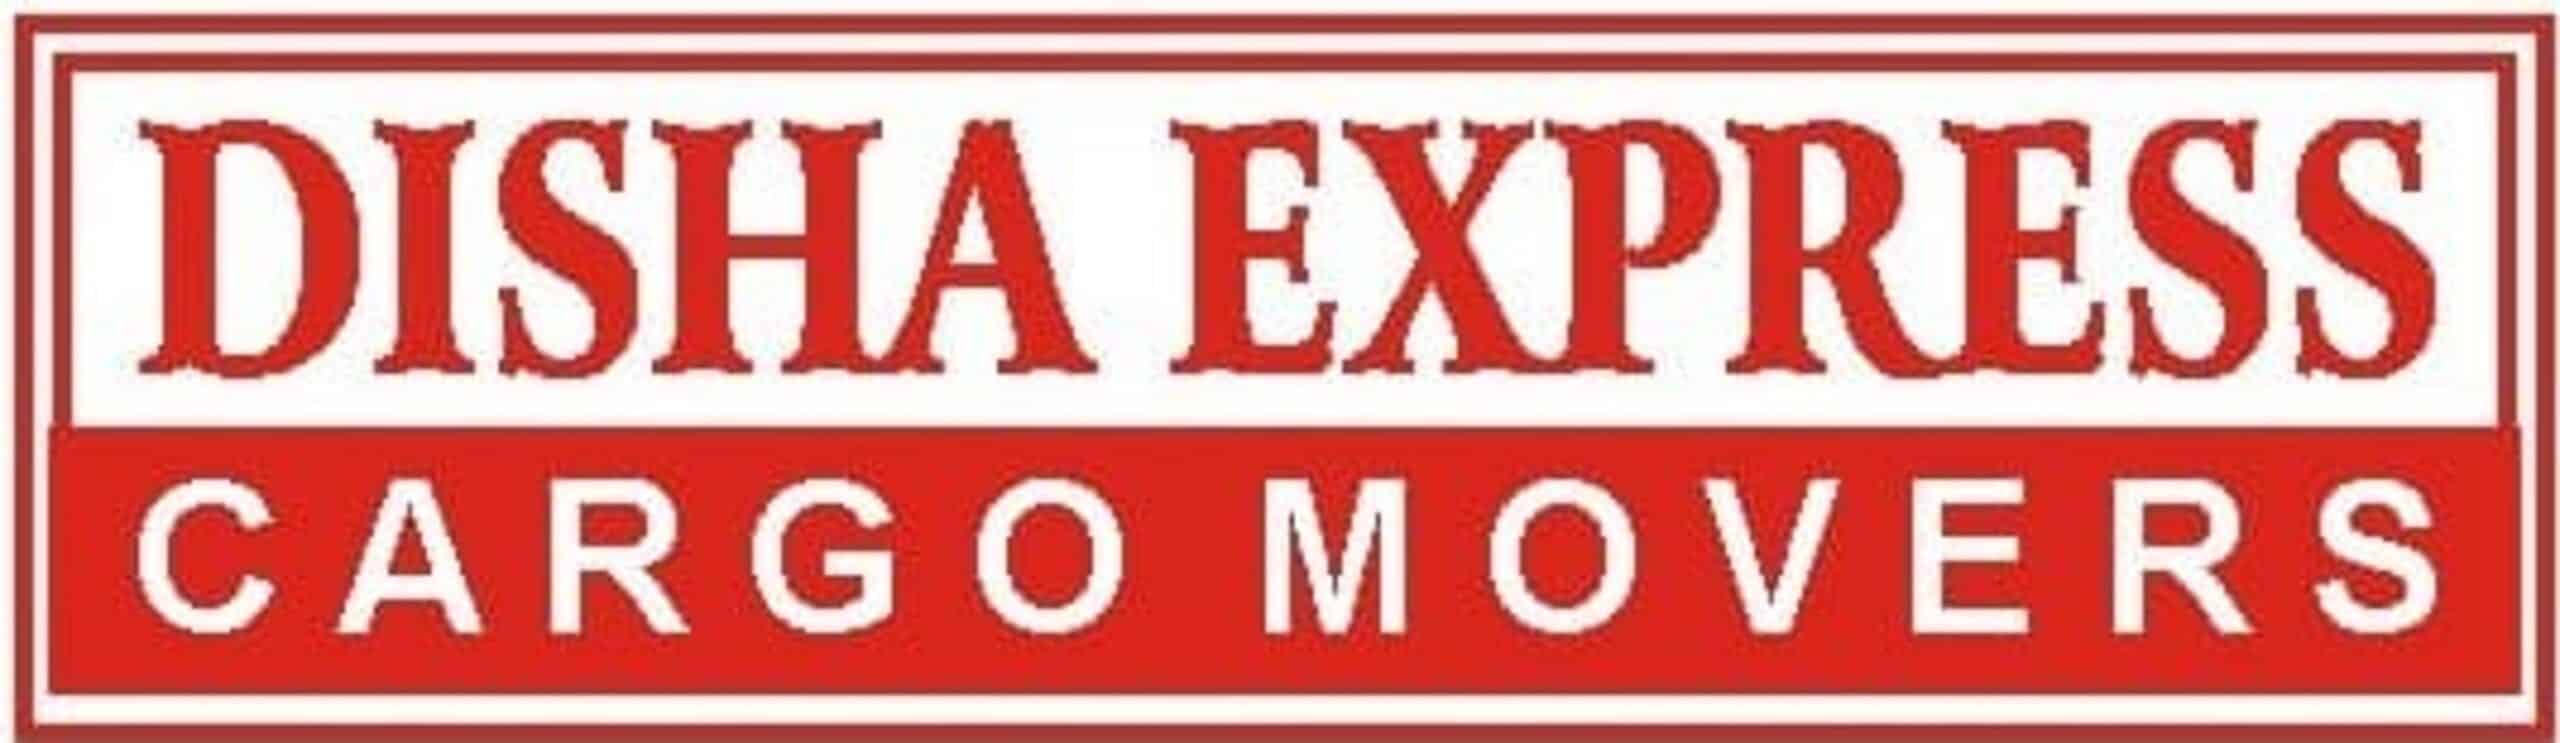 Dishe express logo (1)